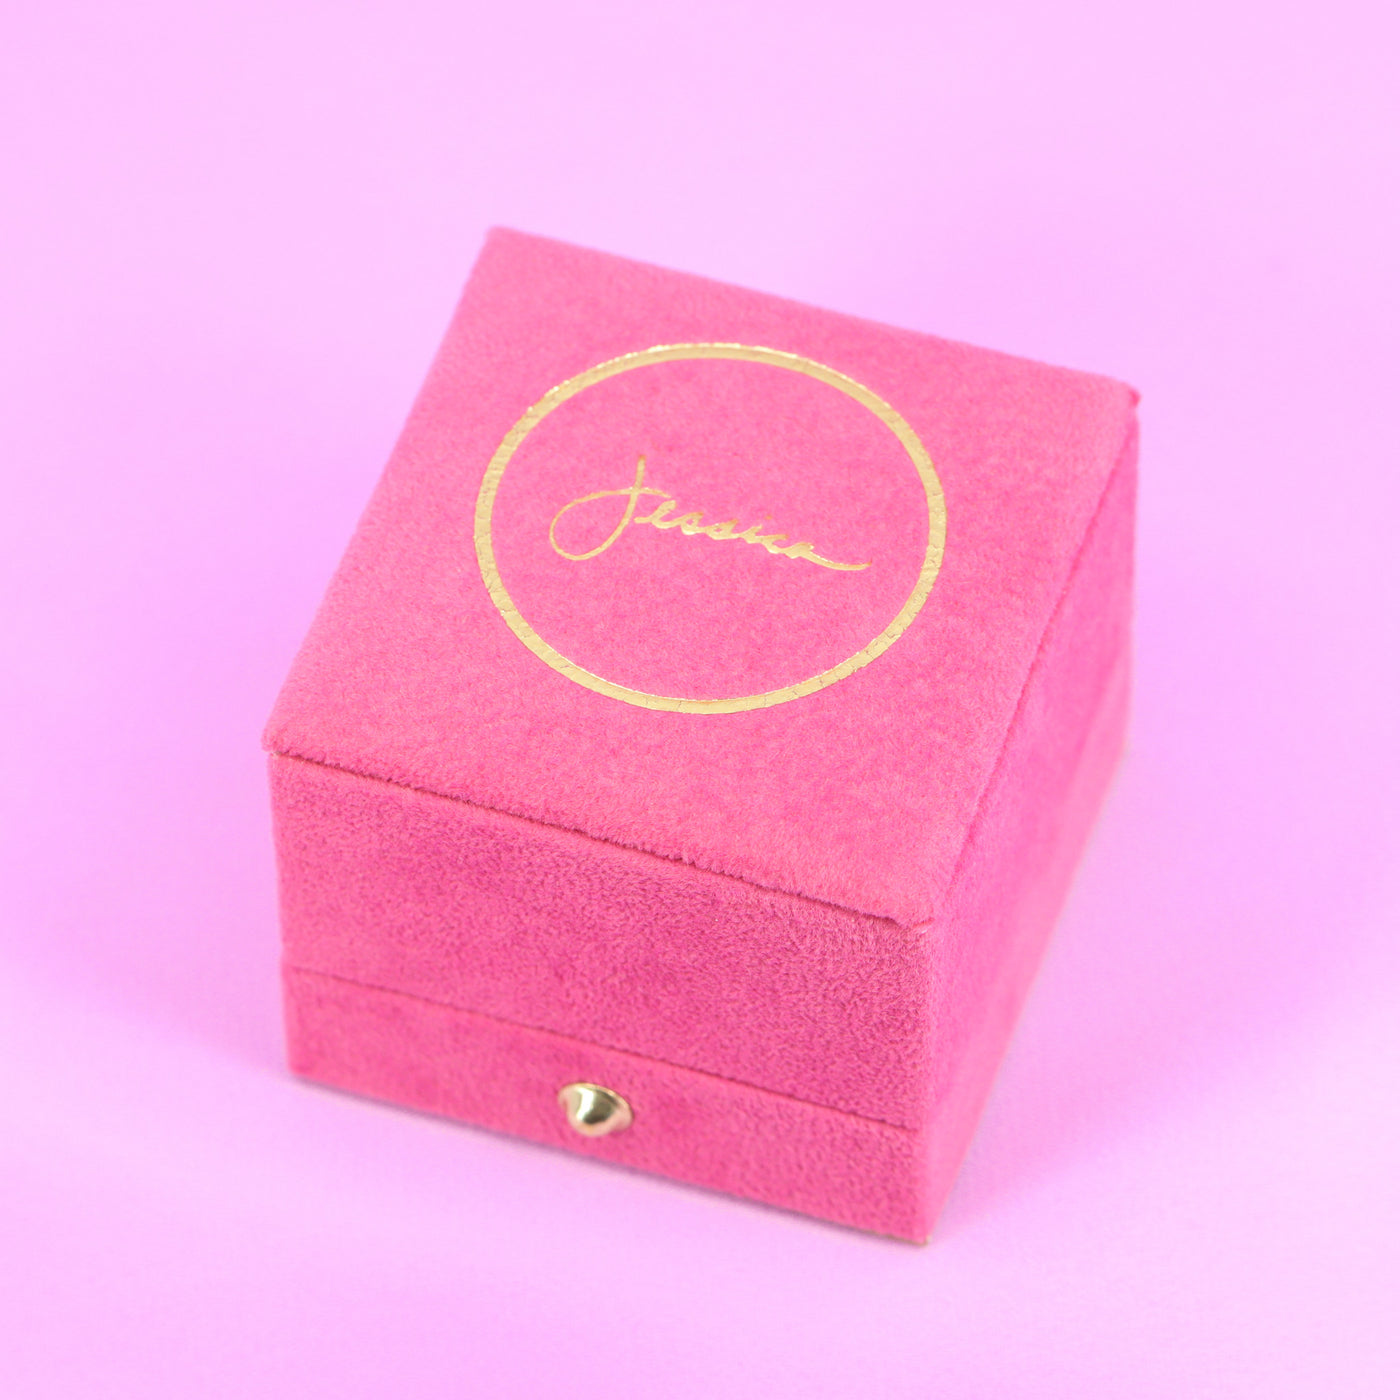 Jessica Flinn Pink Engagement and Wedding Ring Box